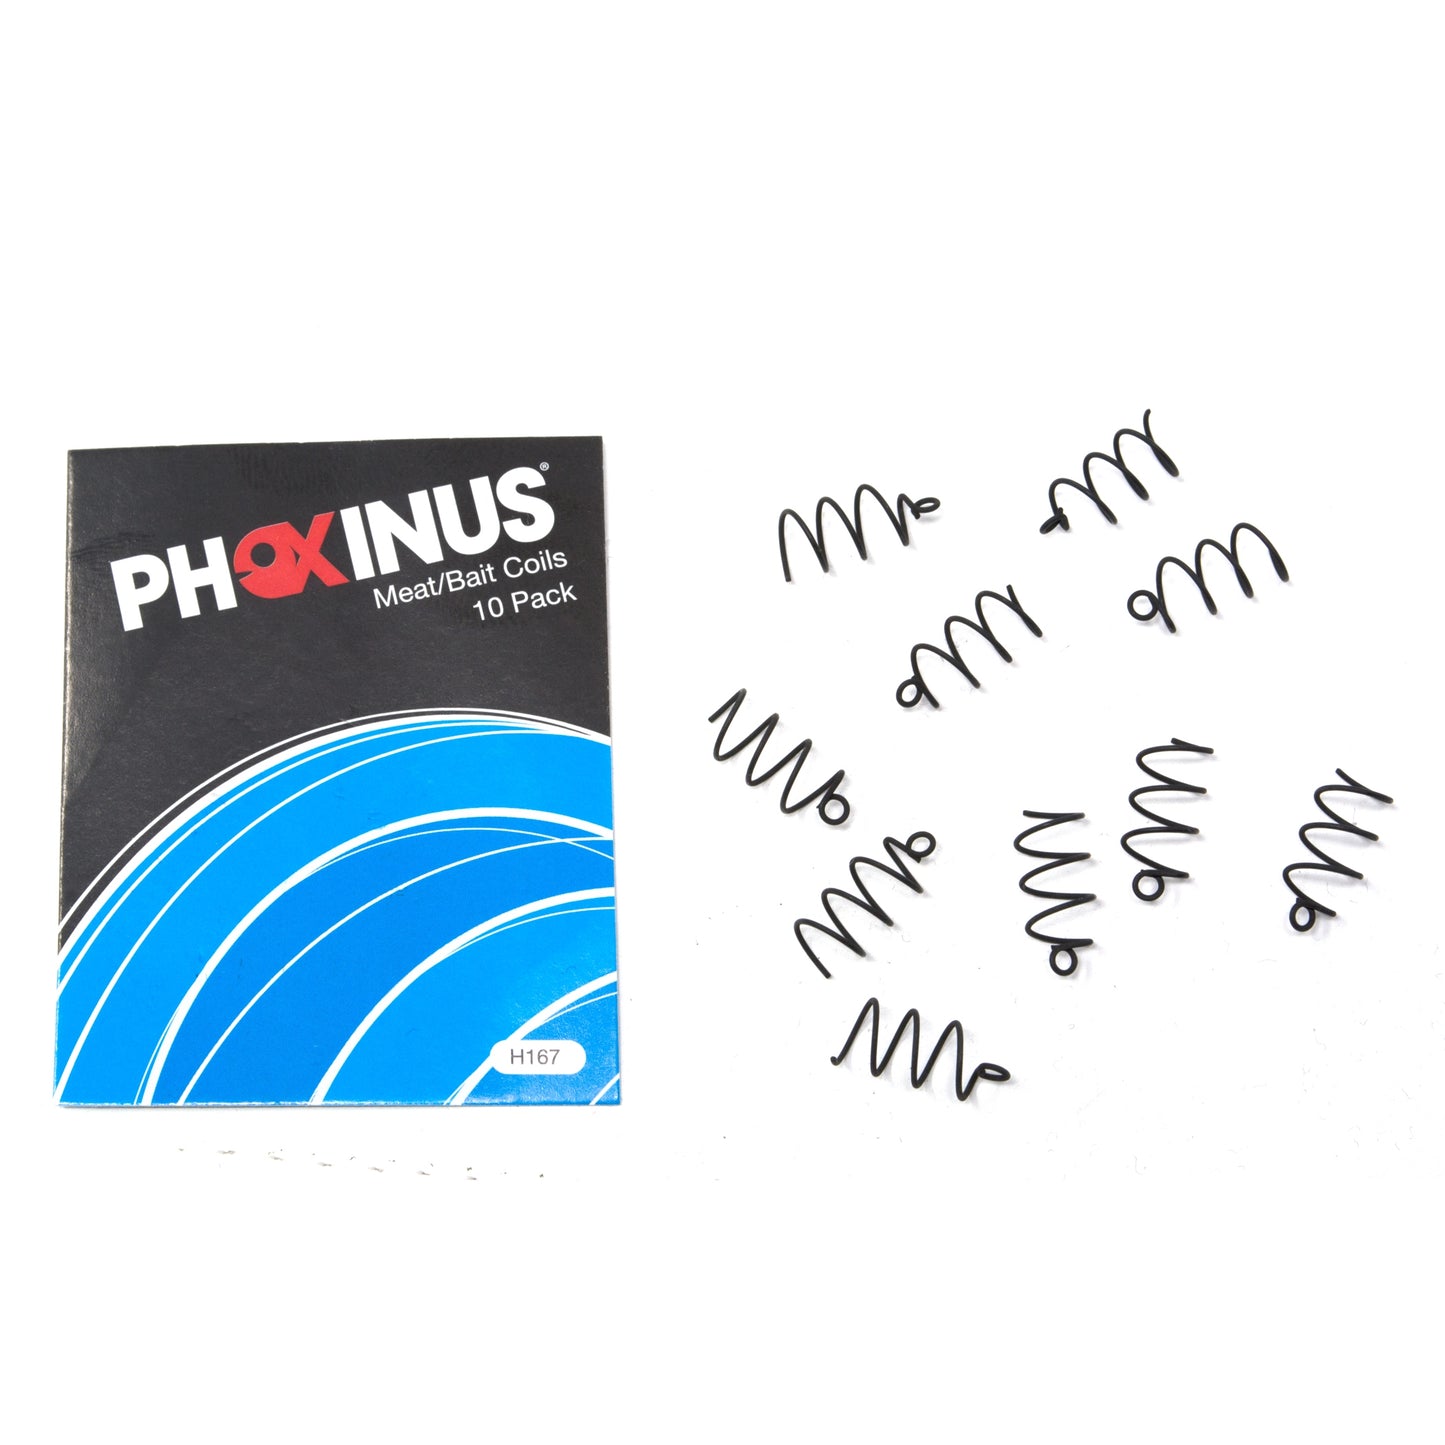 Phoxinus Meat Bait Coil - 10 pack